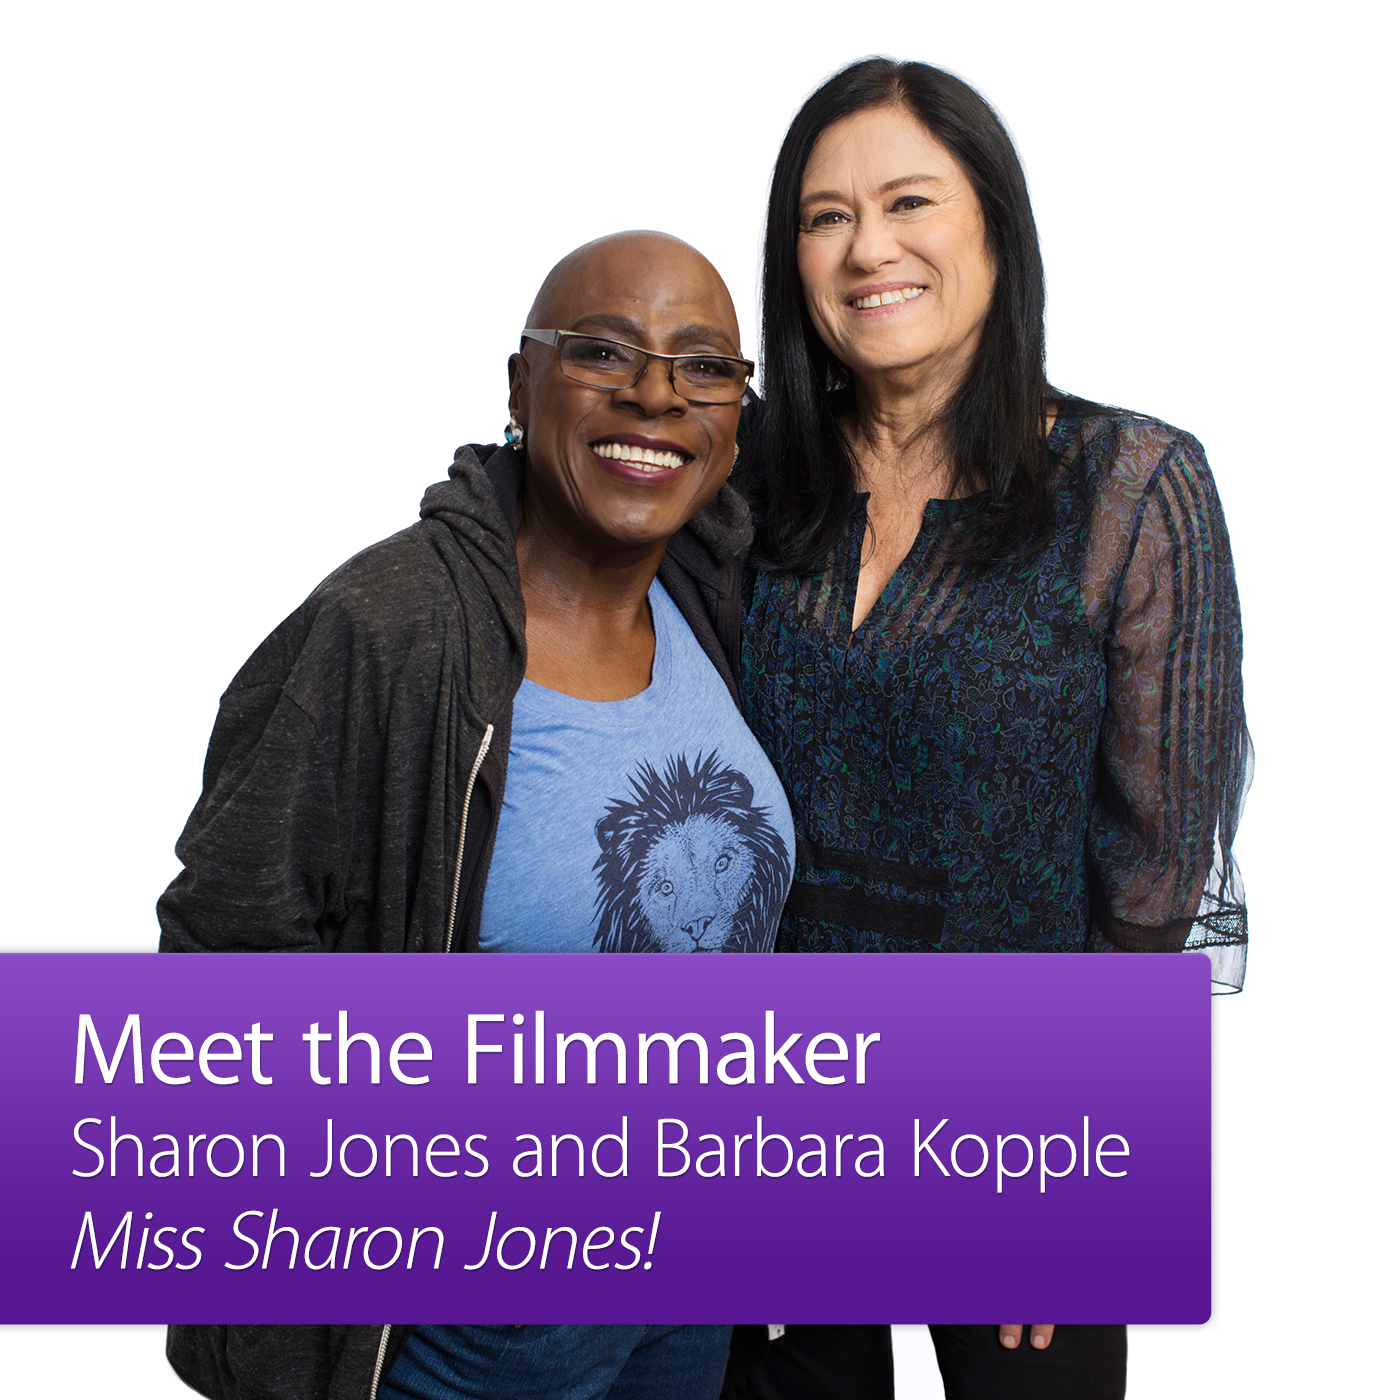 Miss Sharon Jones!: Meet the Filmmaker